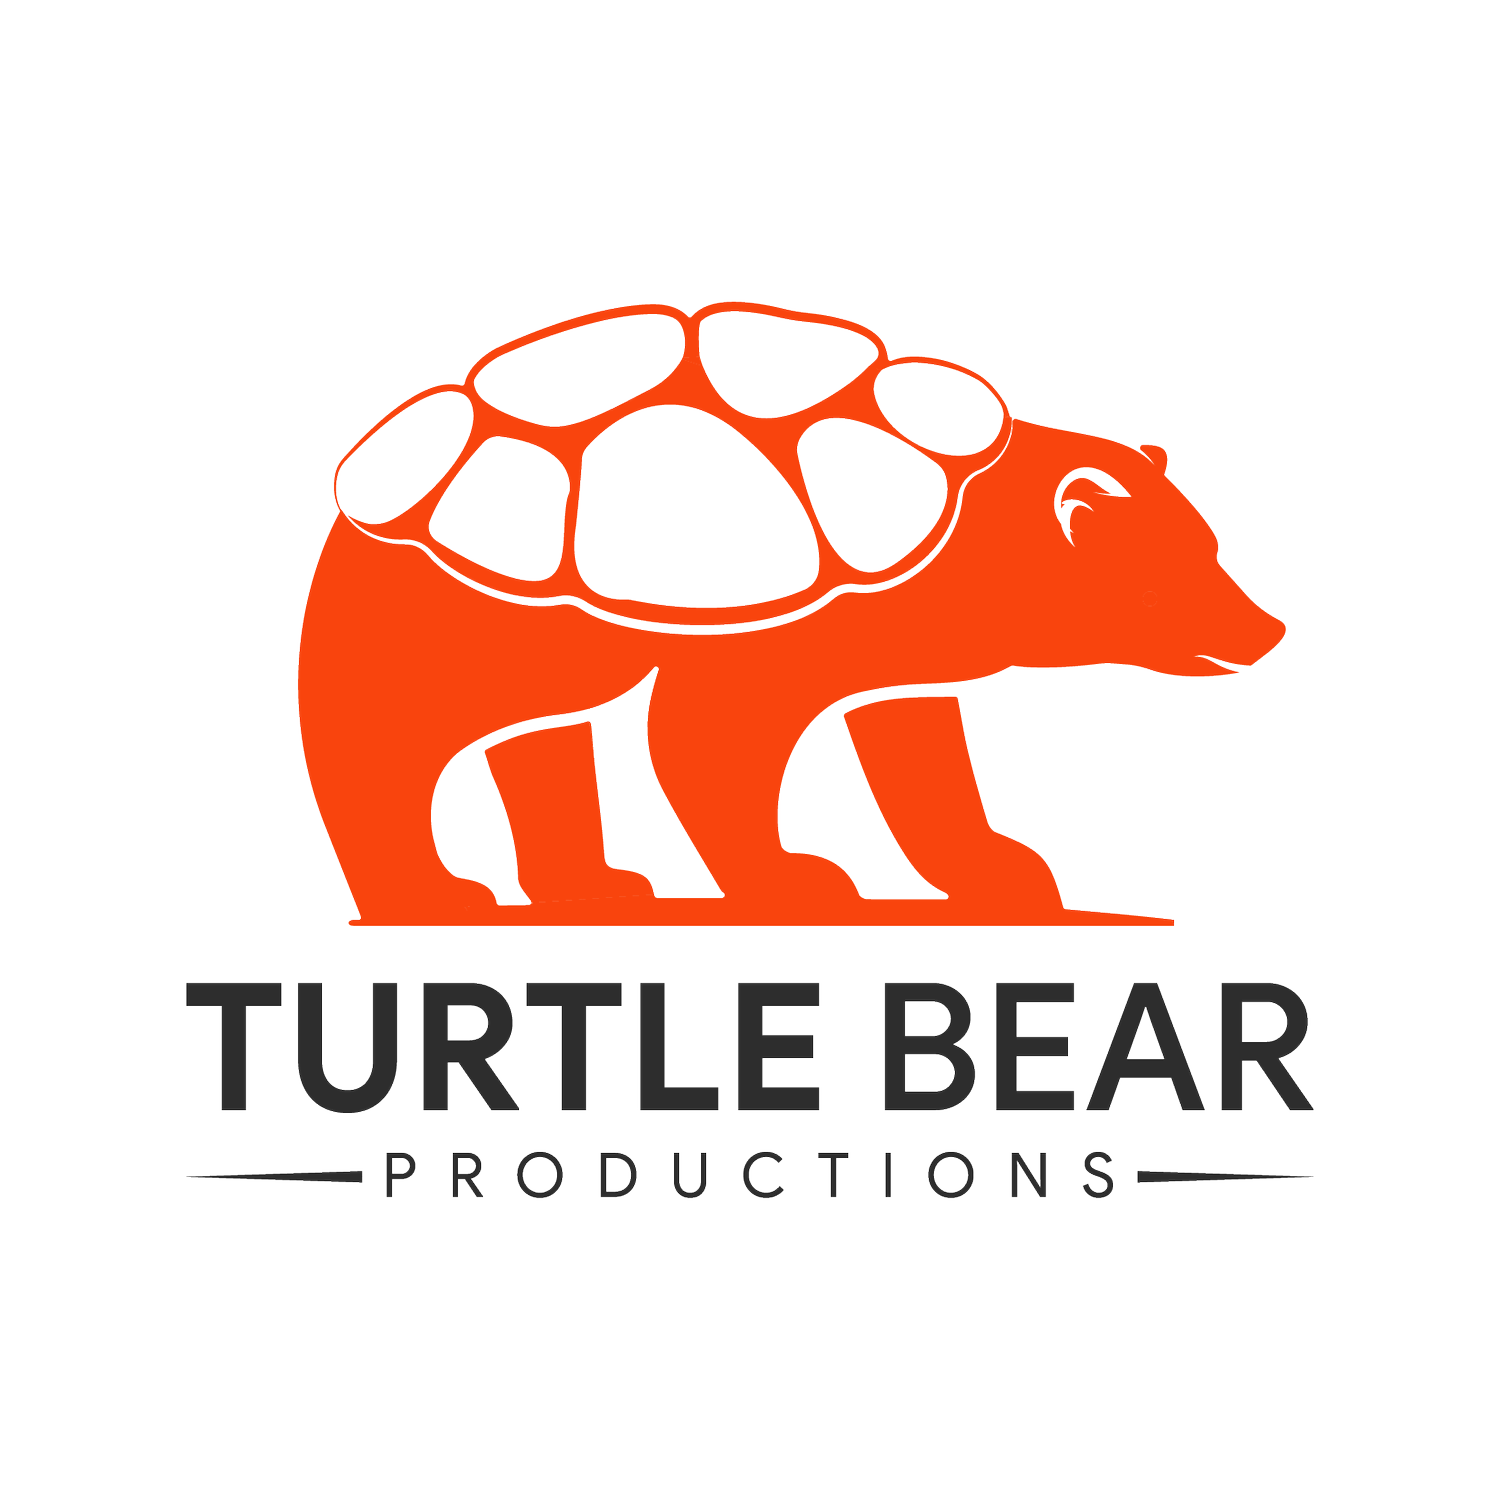 Turtlebear Productions